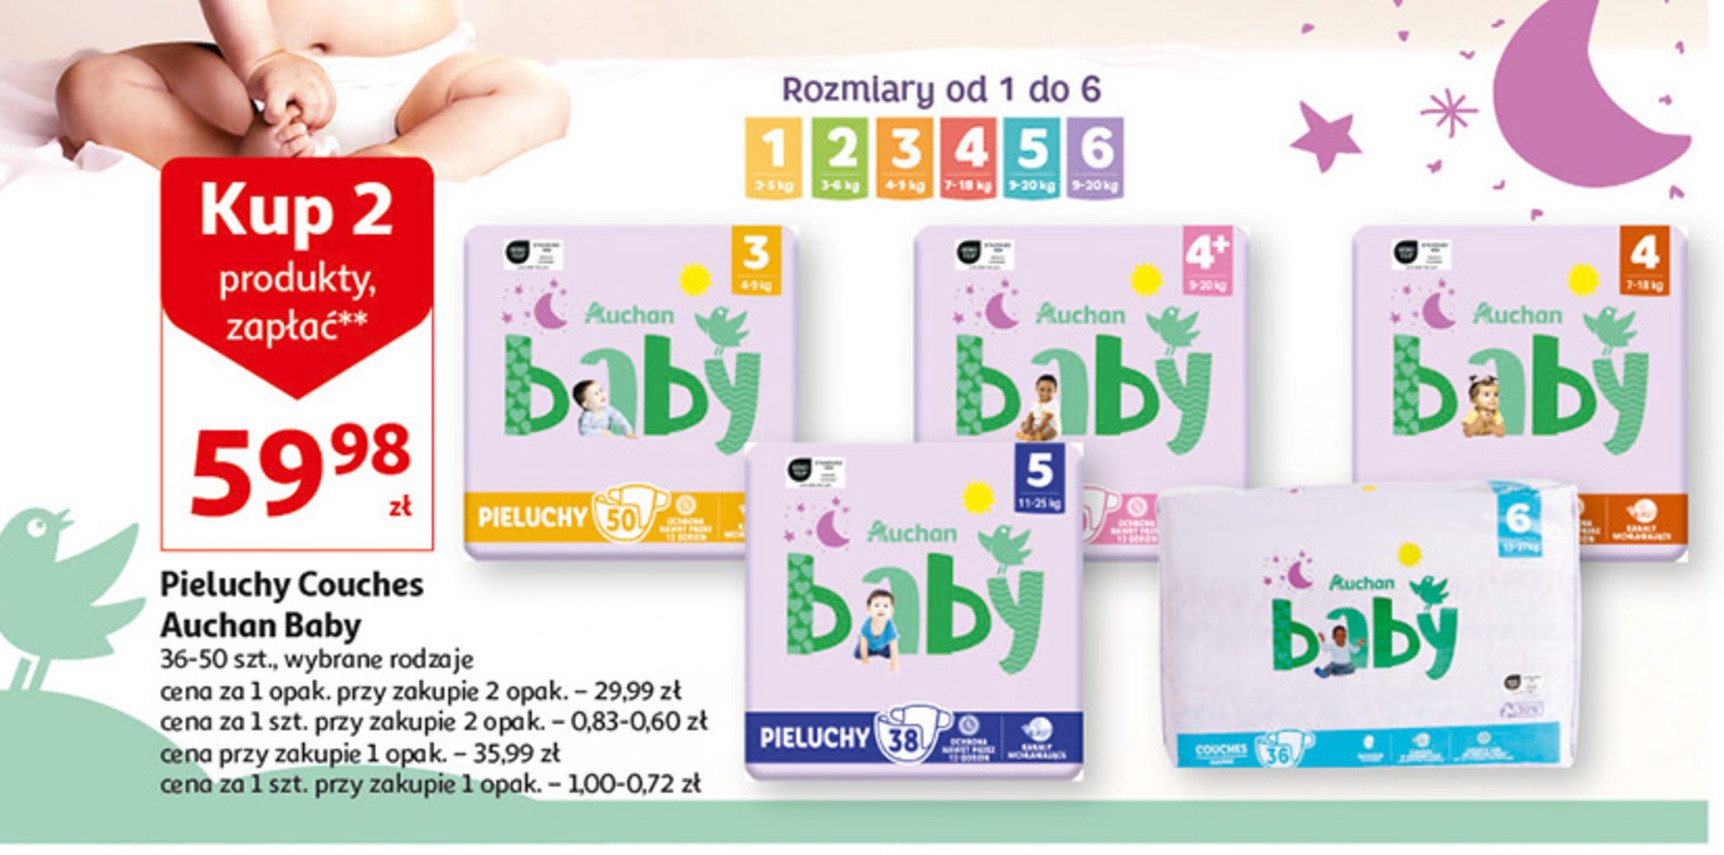 Pieluchy 3 Auchan baby promocja